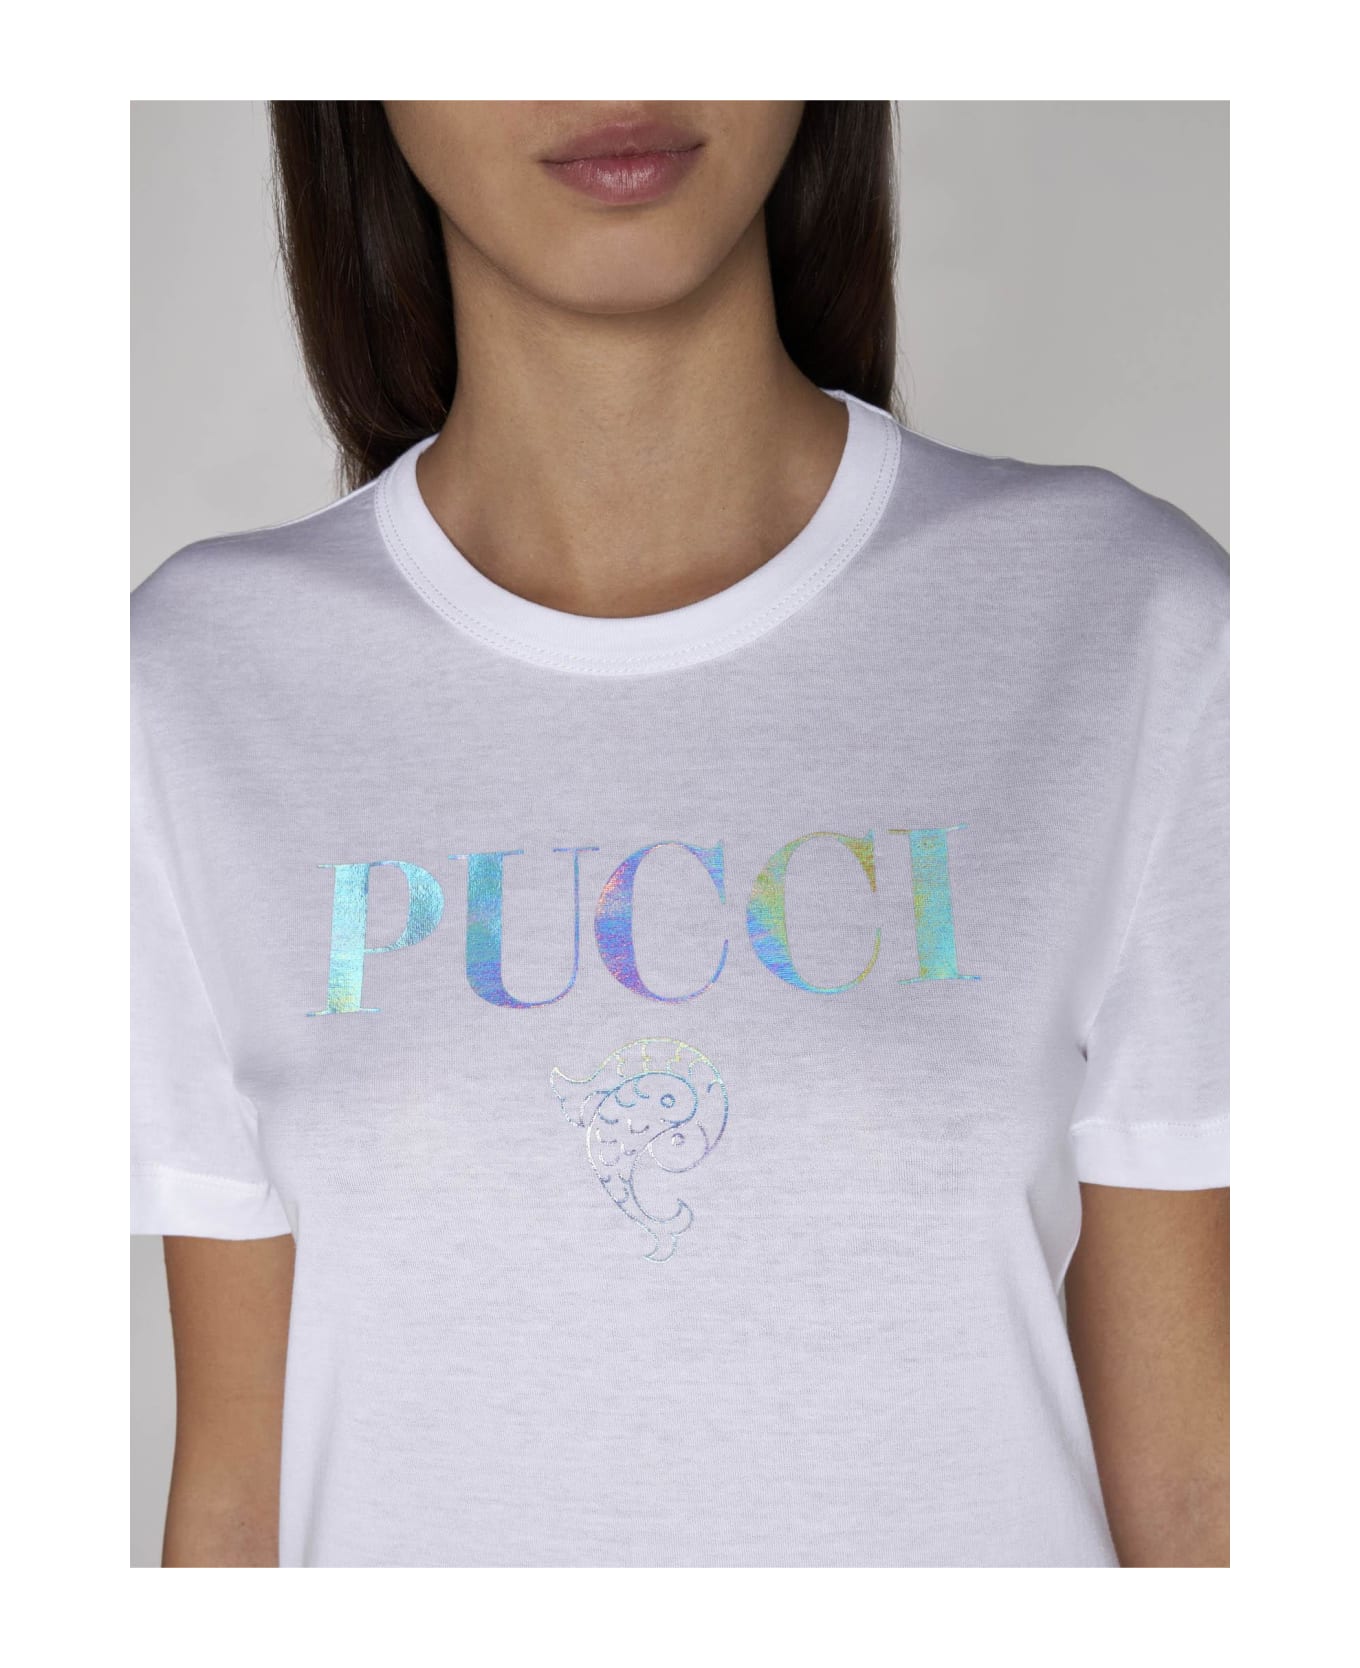 Pucci Logo Cotton T-shirt - BIANCO Tシャツ